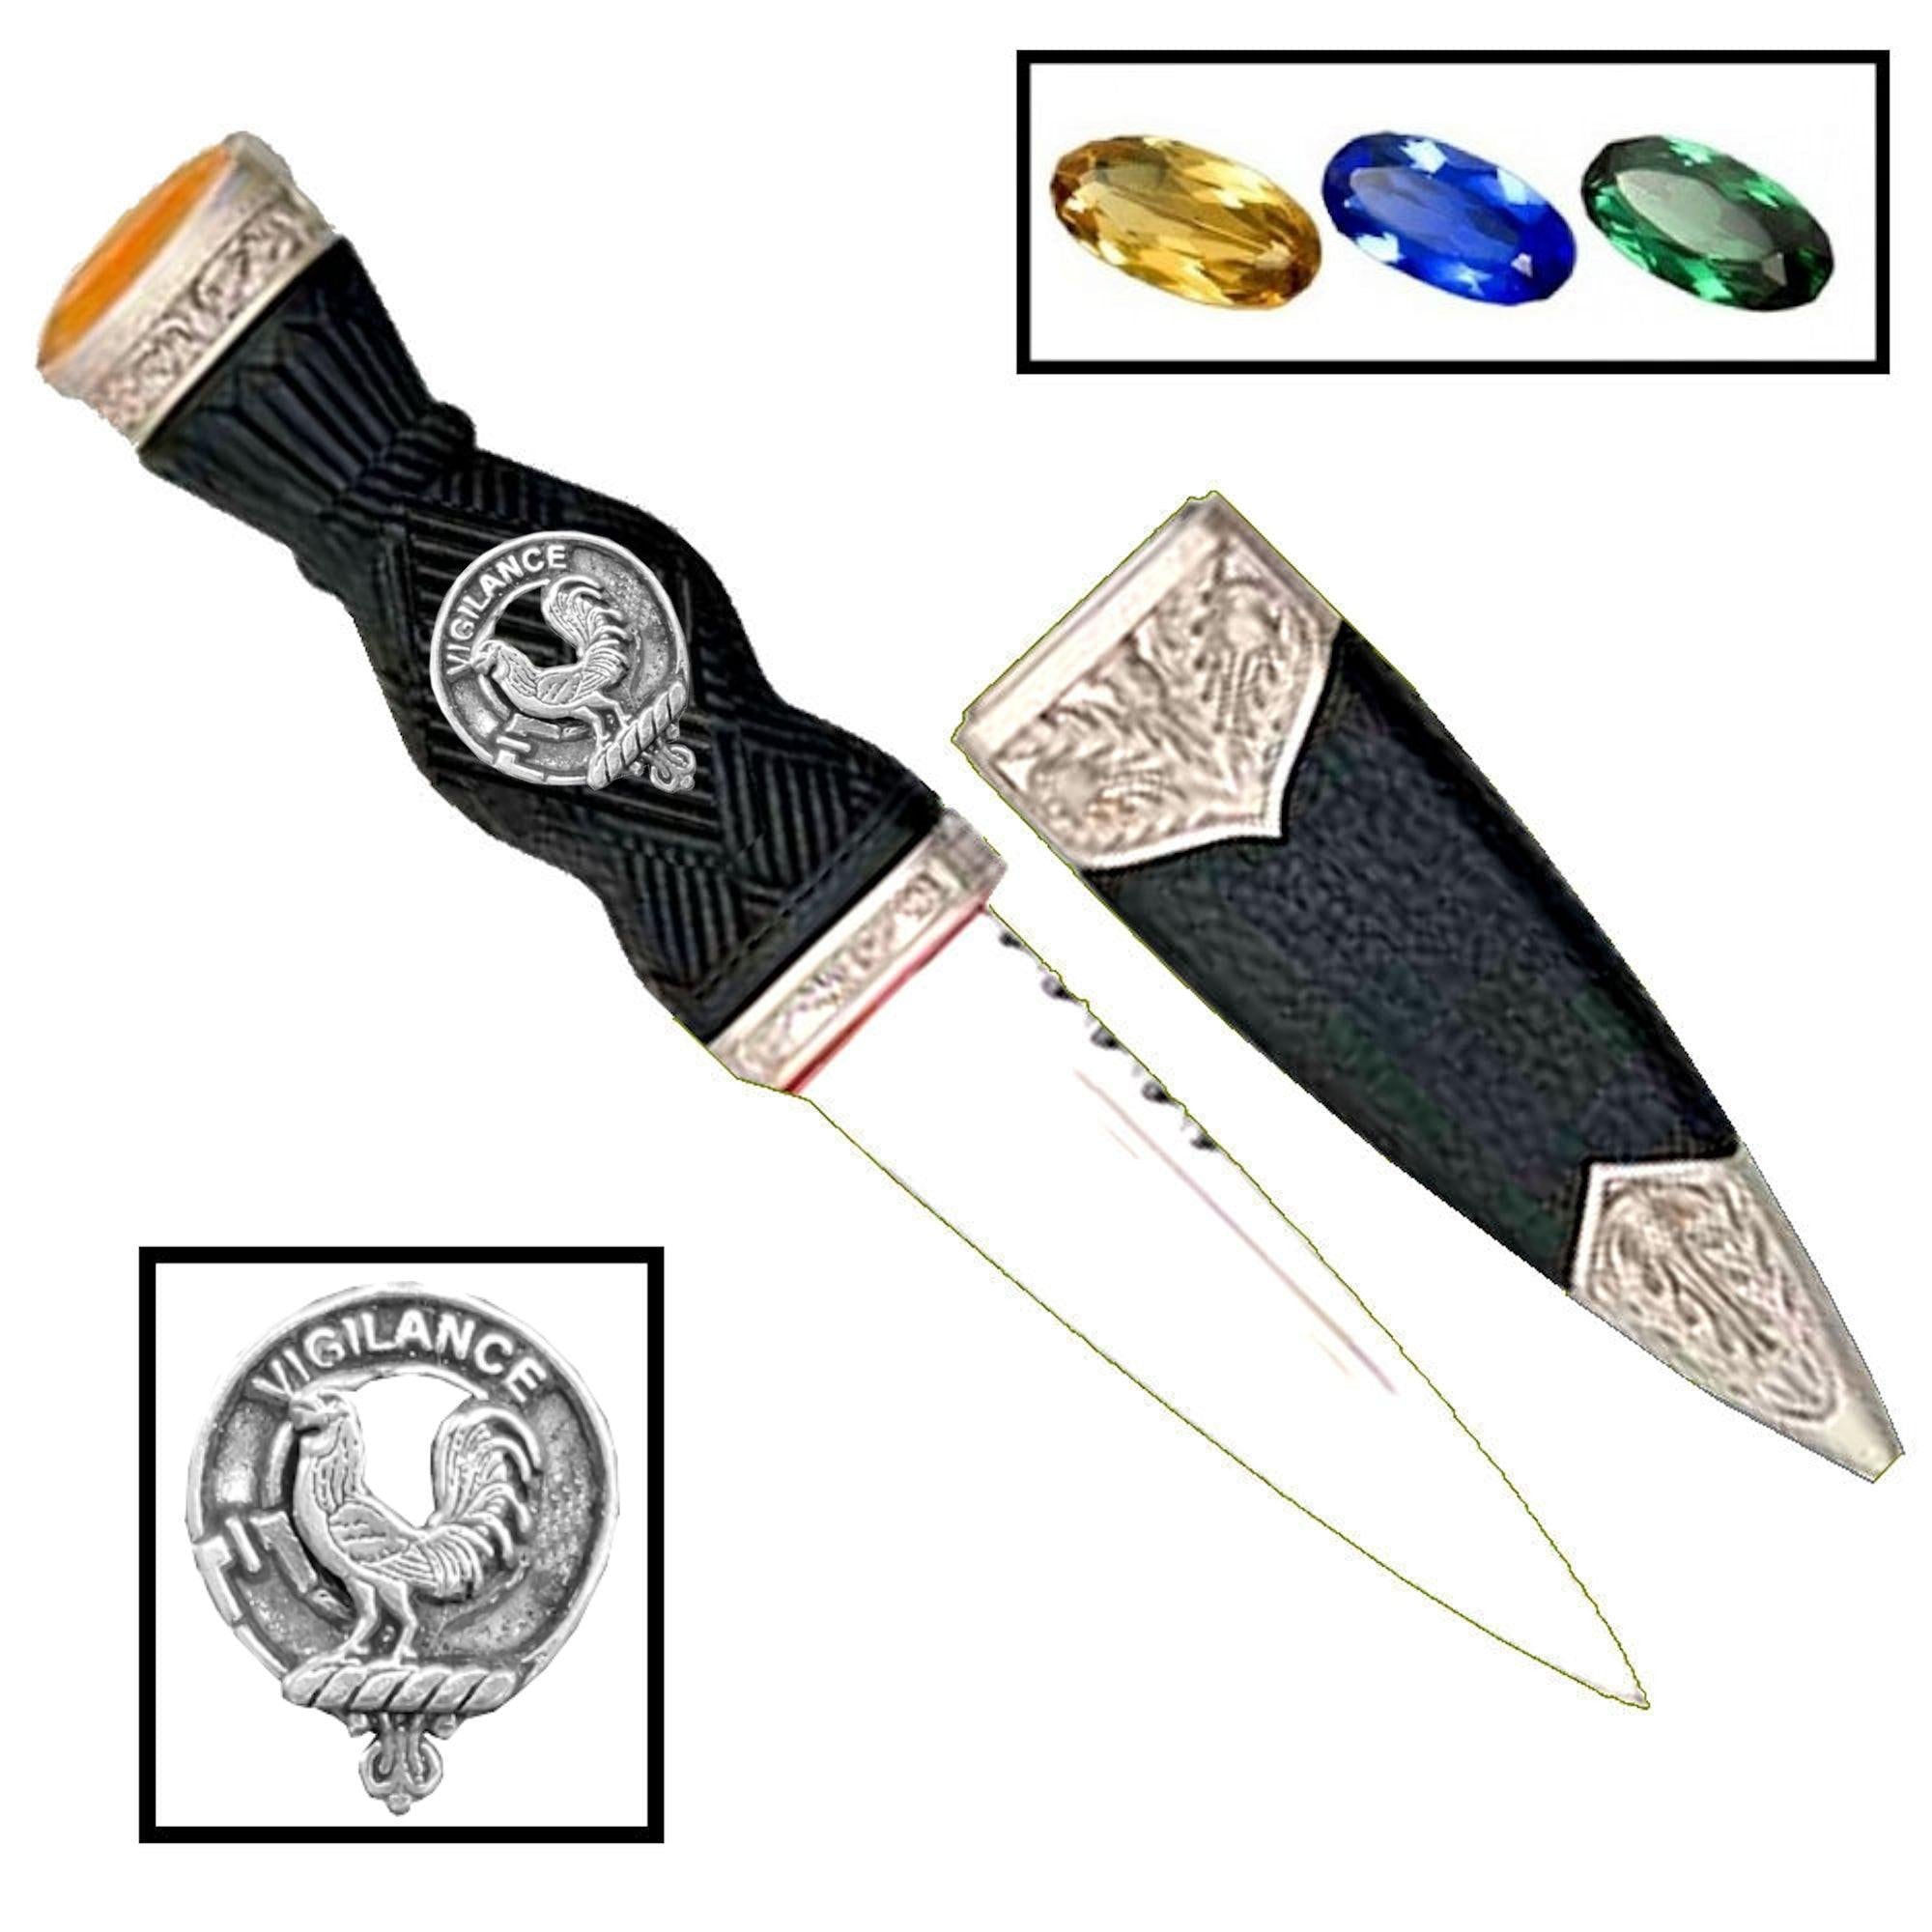 Laing Clan Crest Sgian Dubh, Scottish Knife